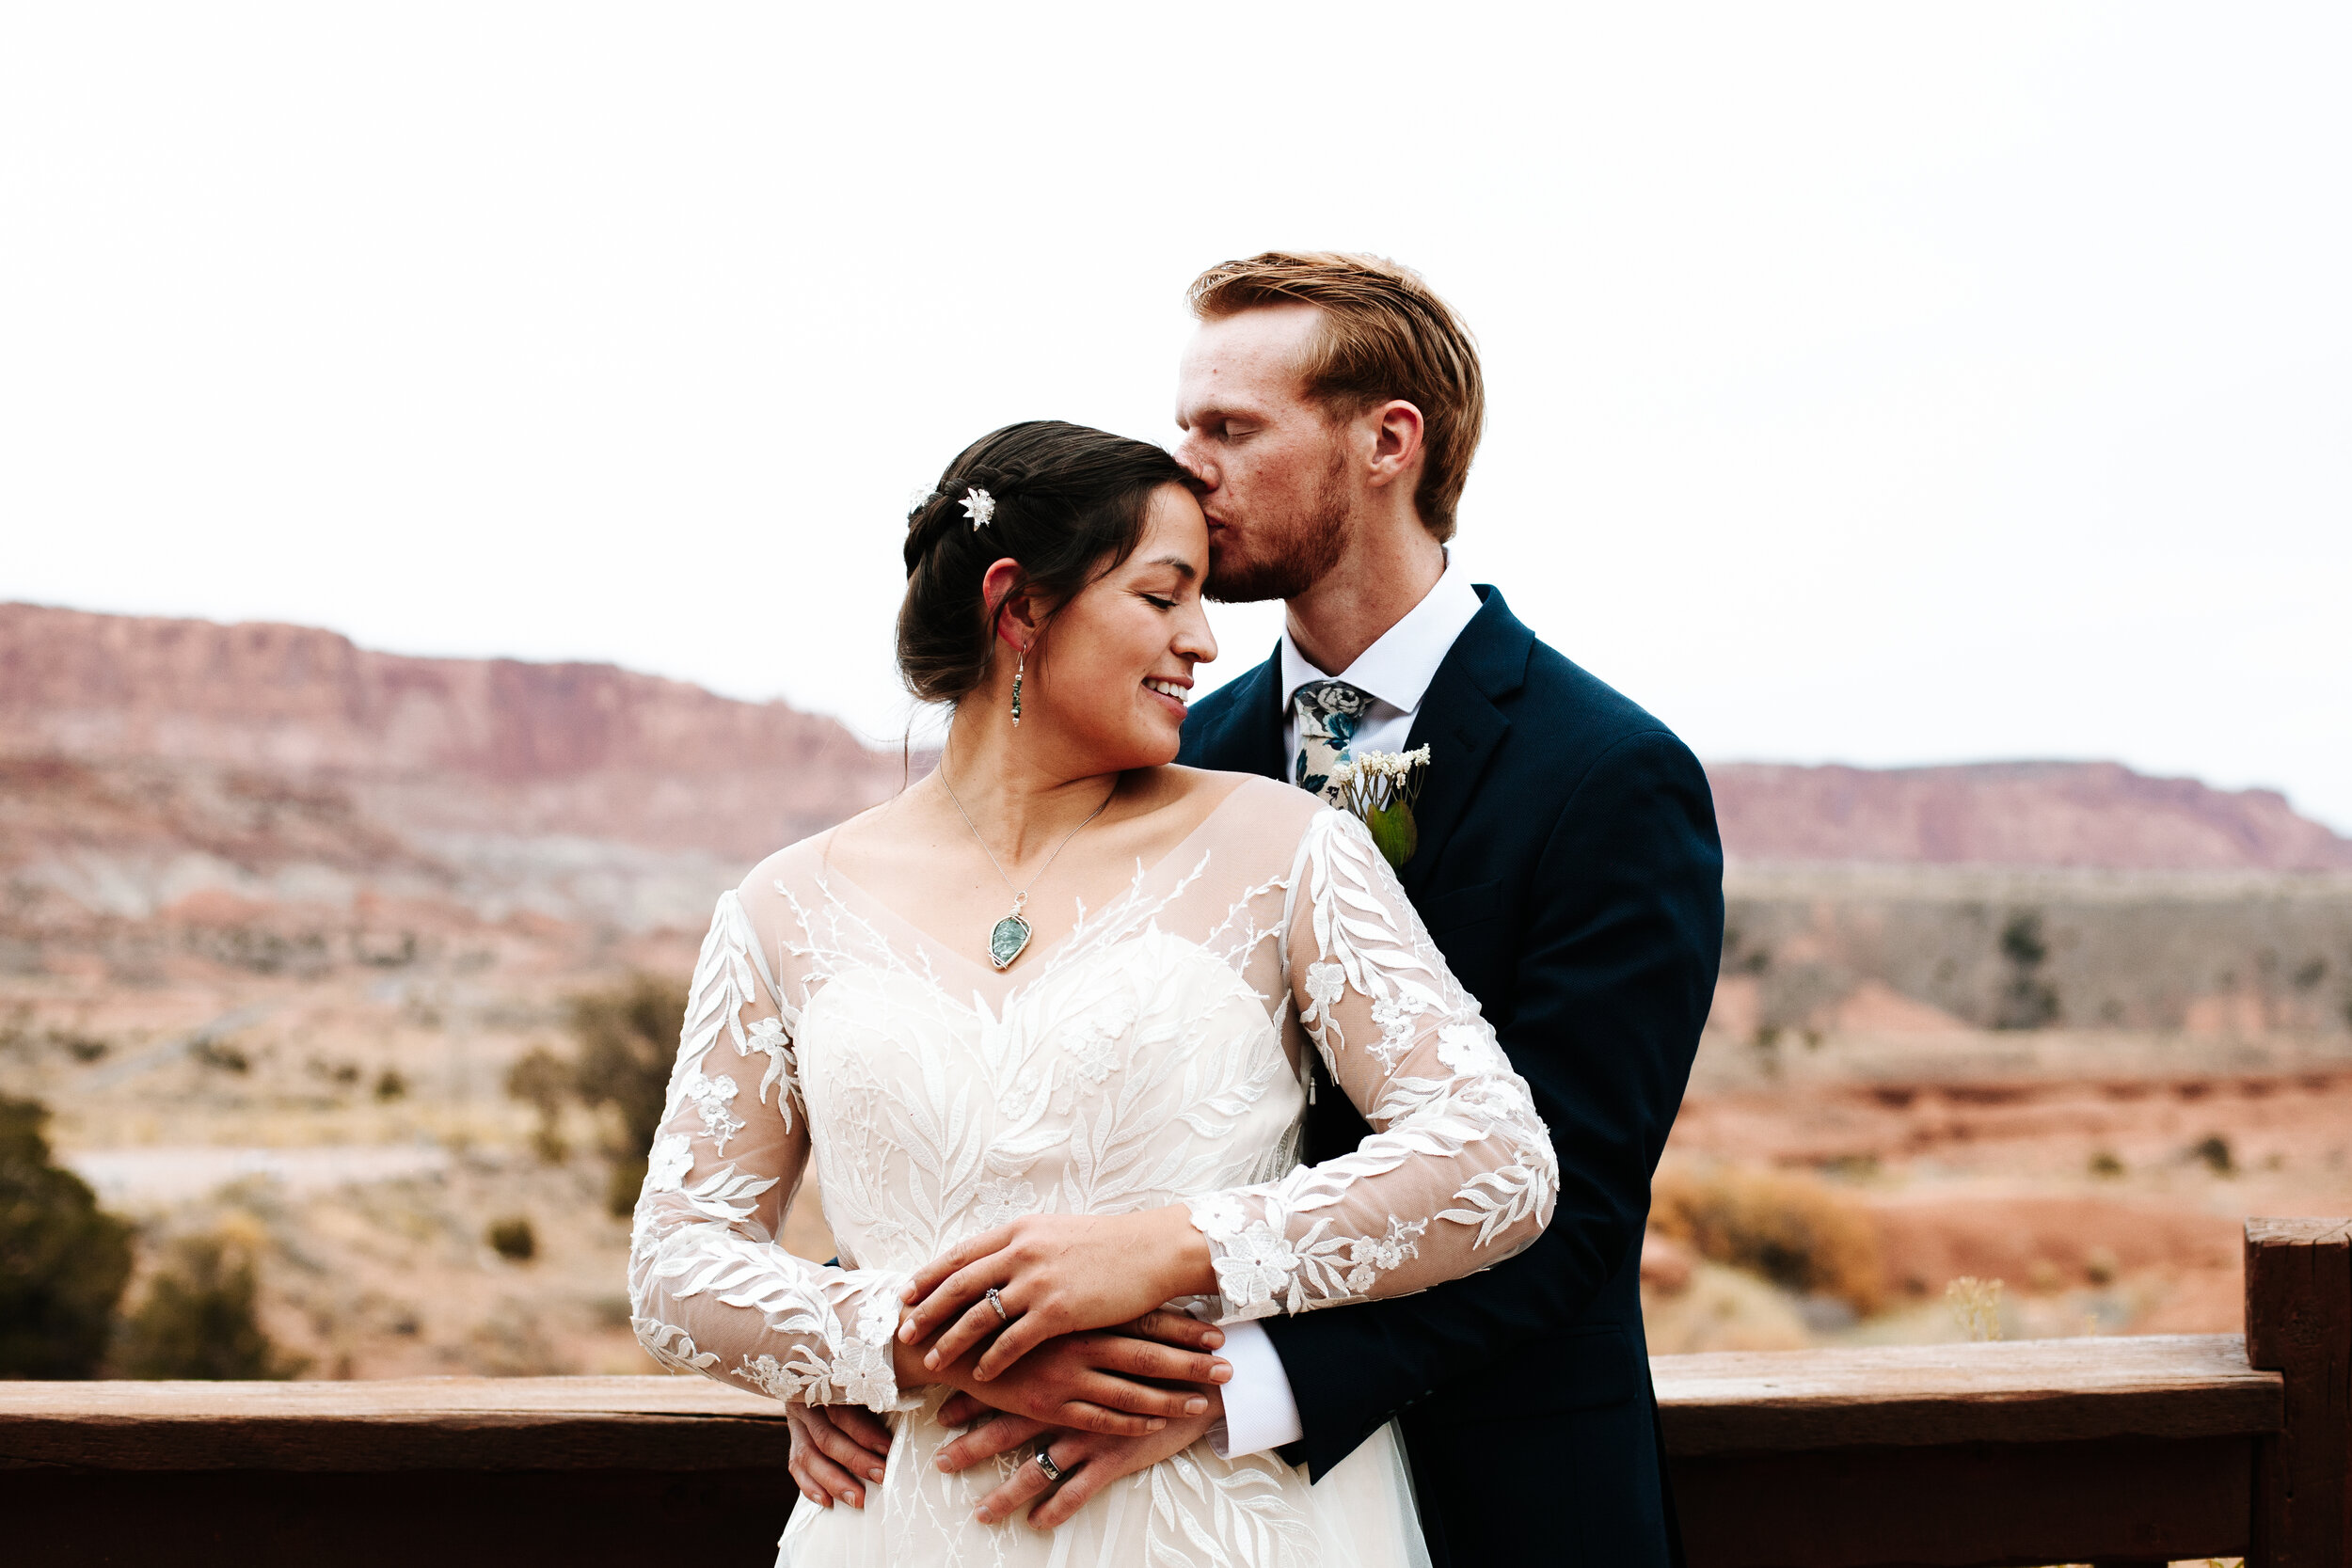 Couple at their wedding in Moab, Utah.